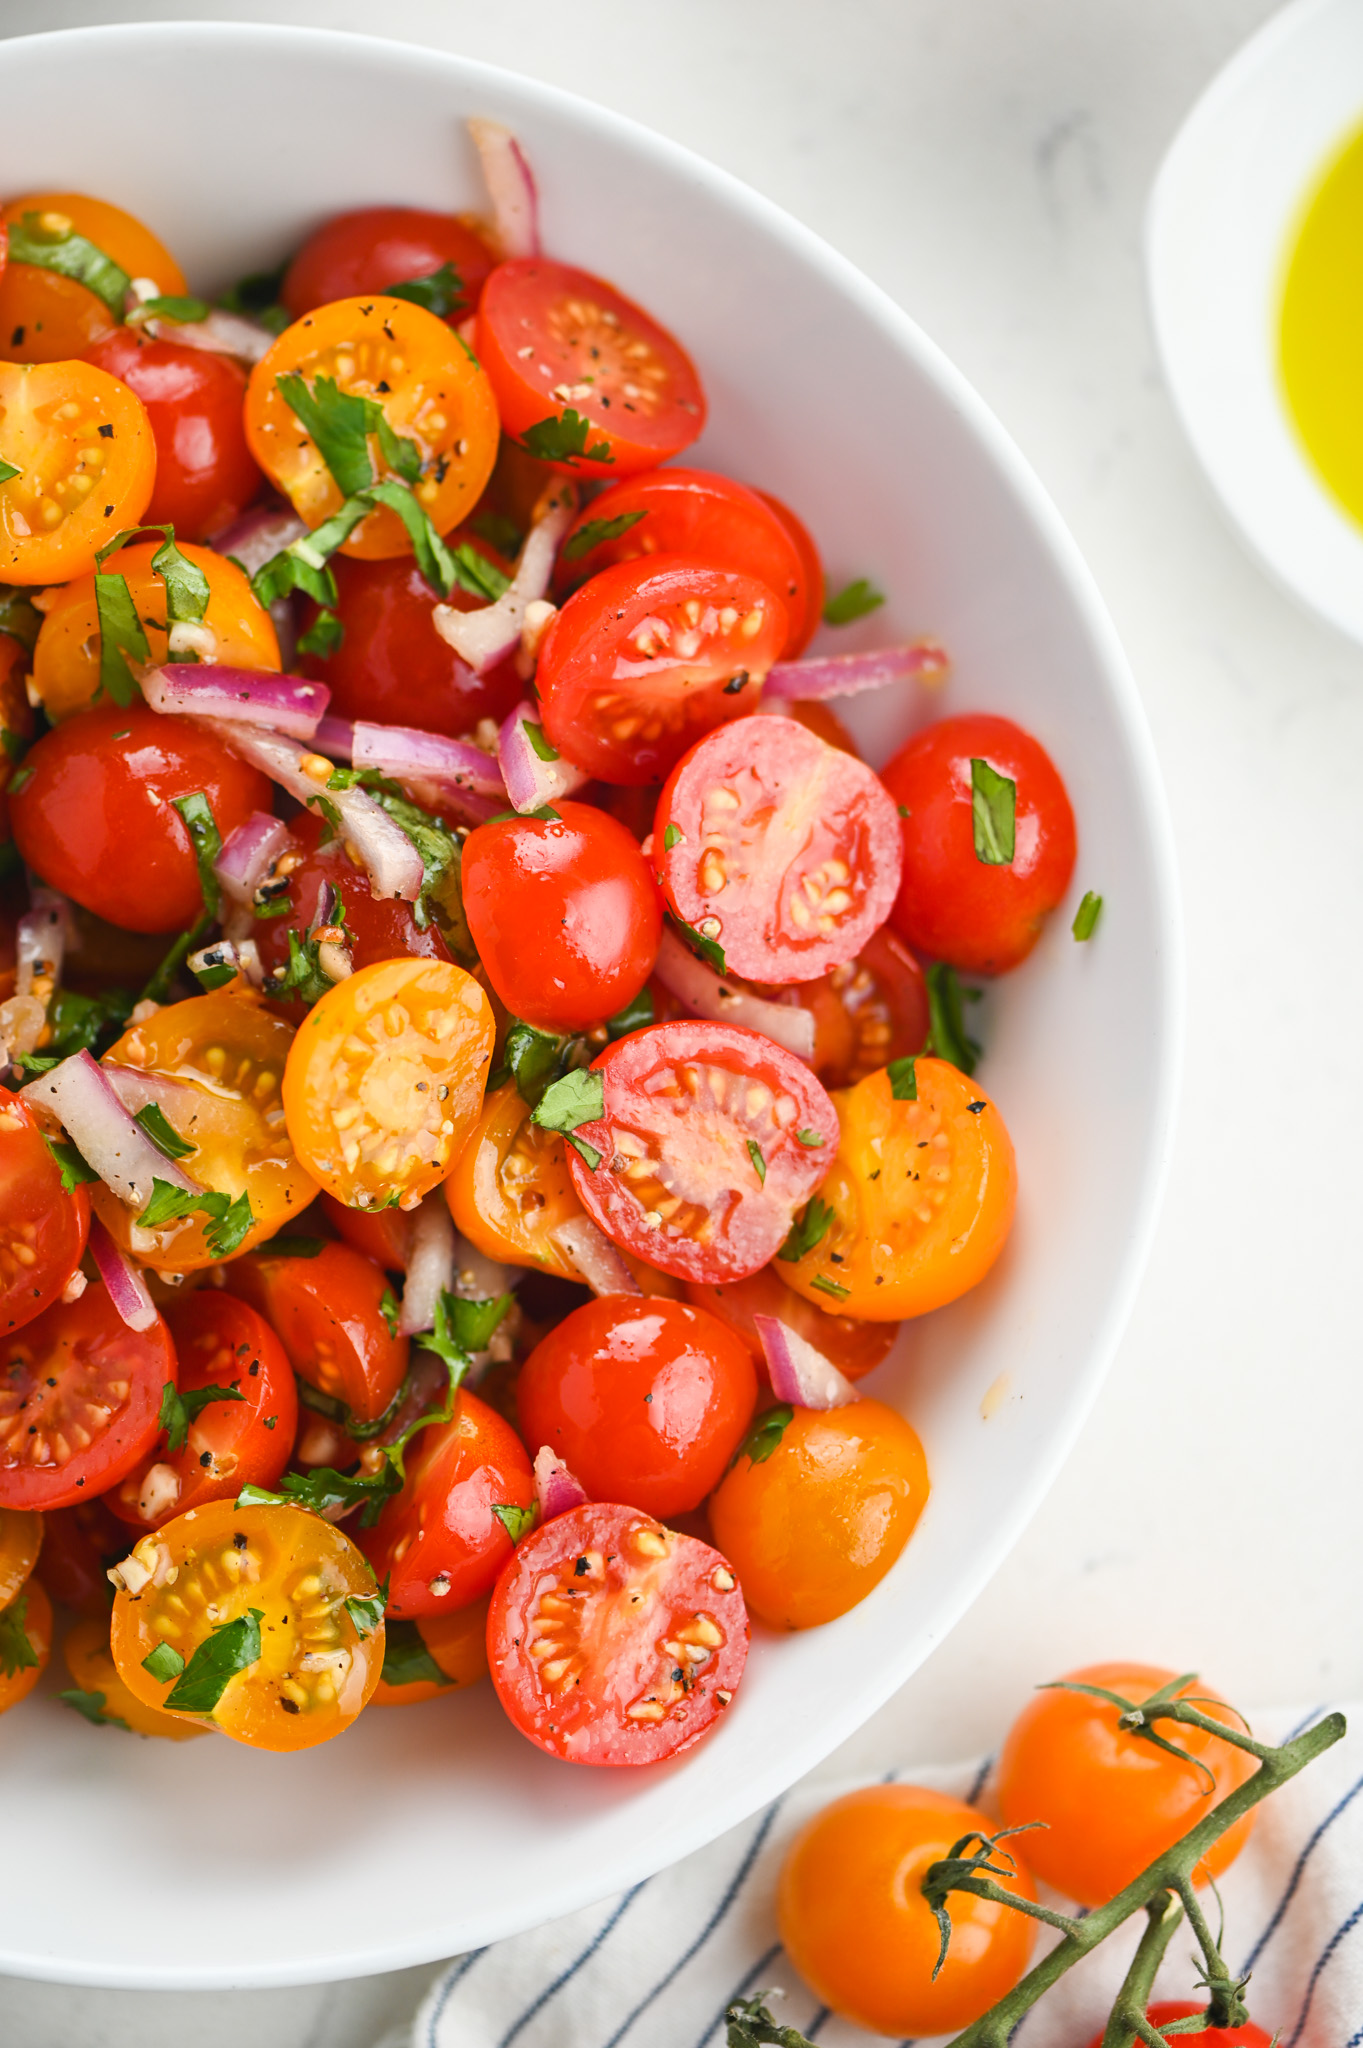 https://www.lifesambrosia.com/wp-content/uploads/Simple-Summer-Tomato-Salad-Recipe-4.jpg